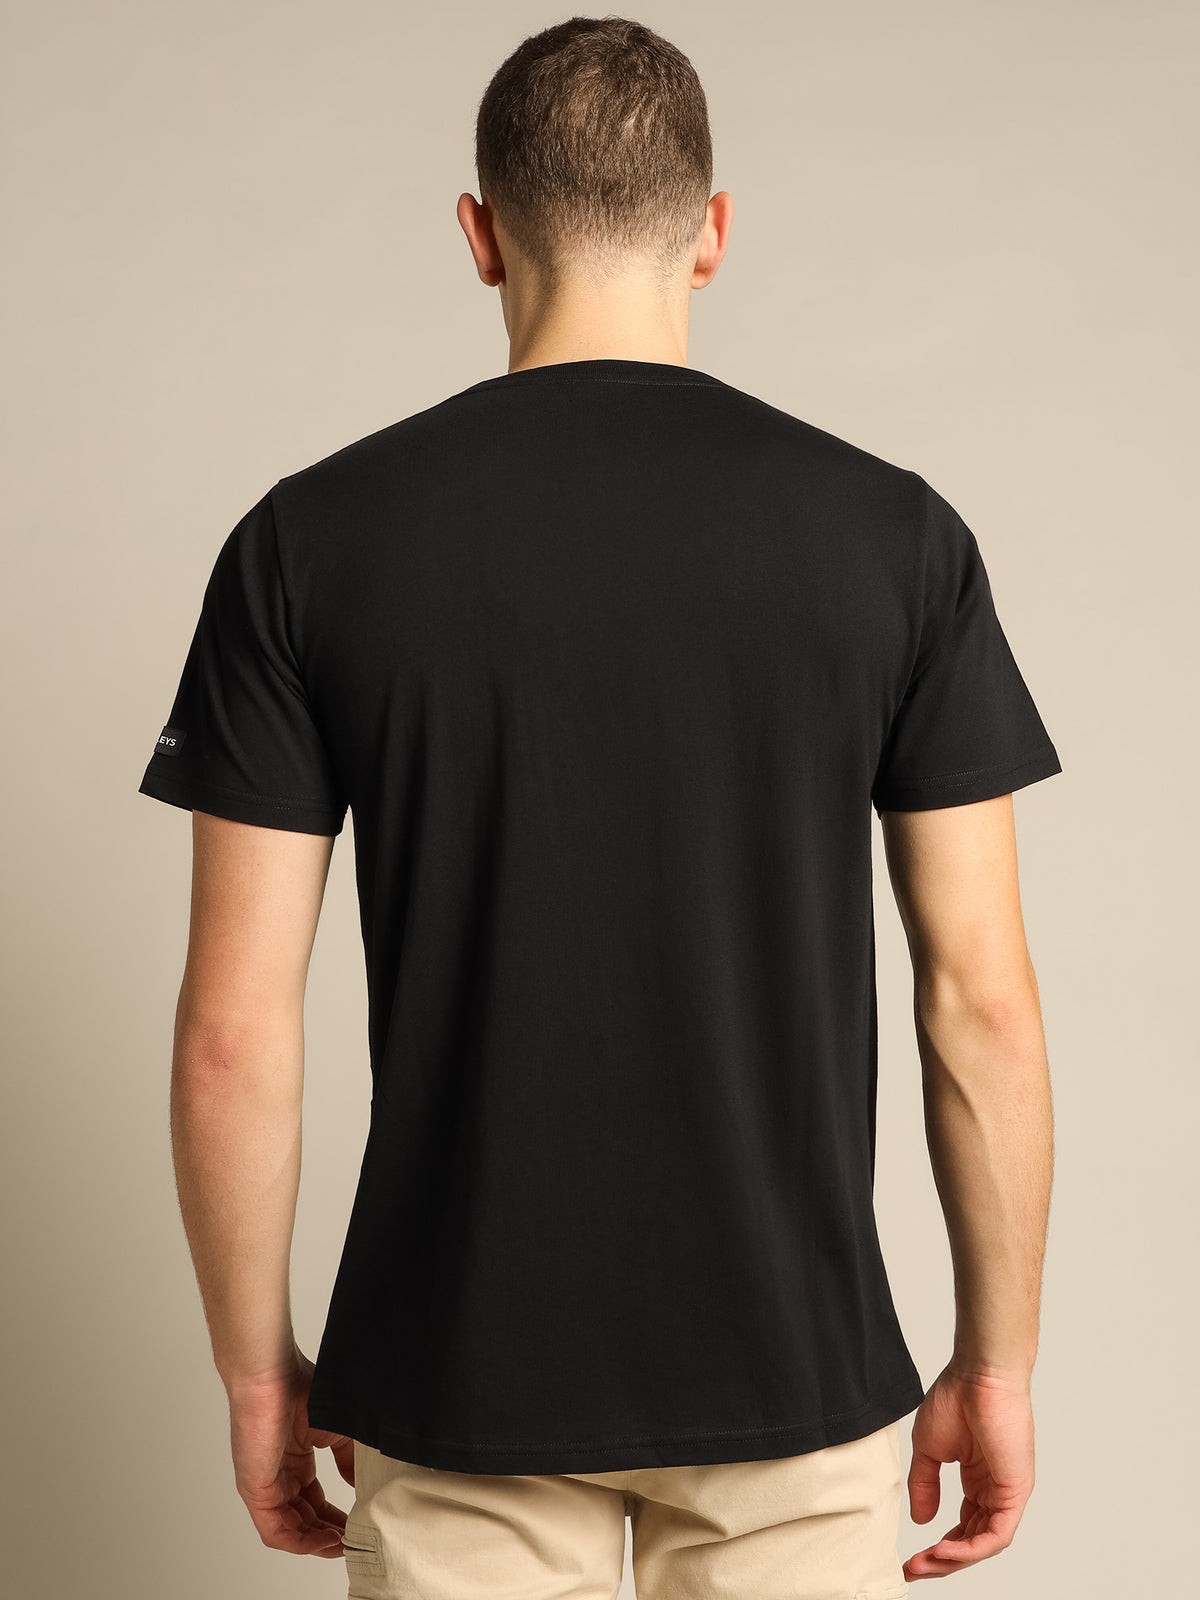 Nico T-Shirt in Black